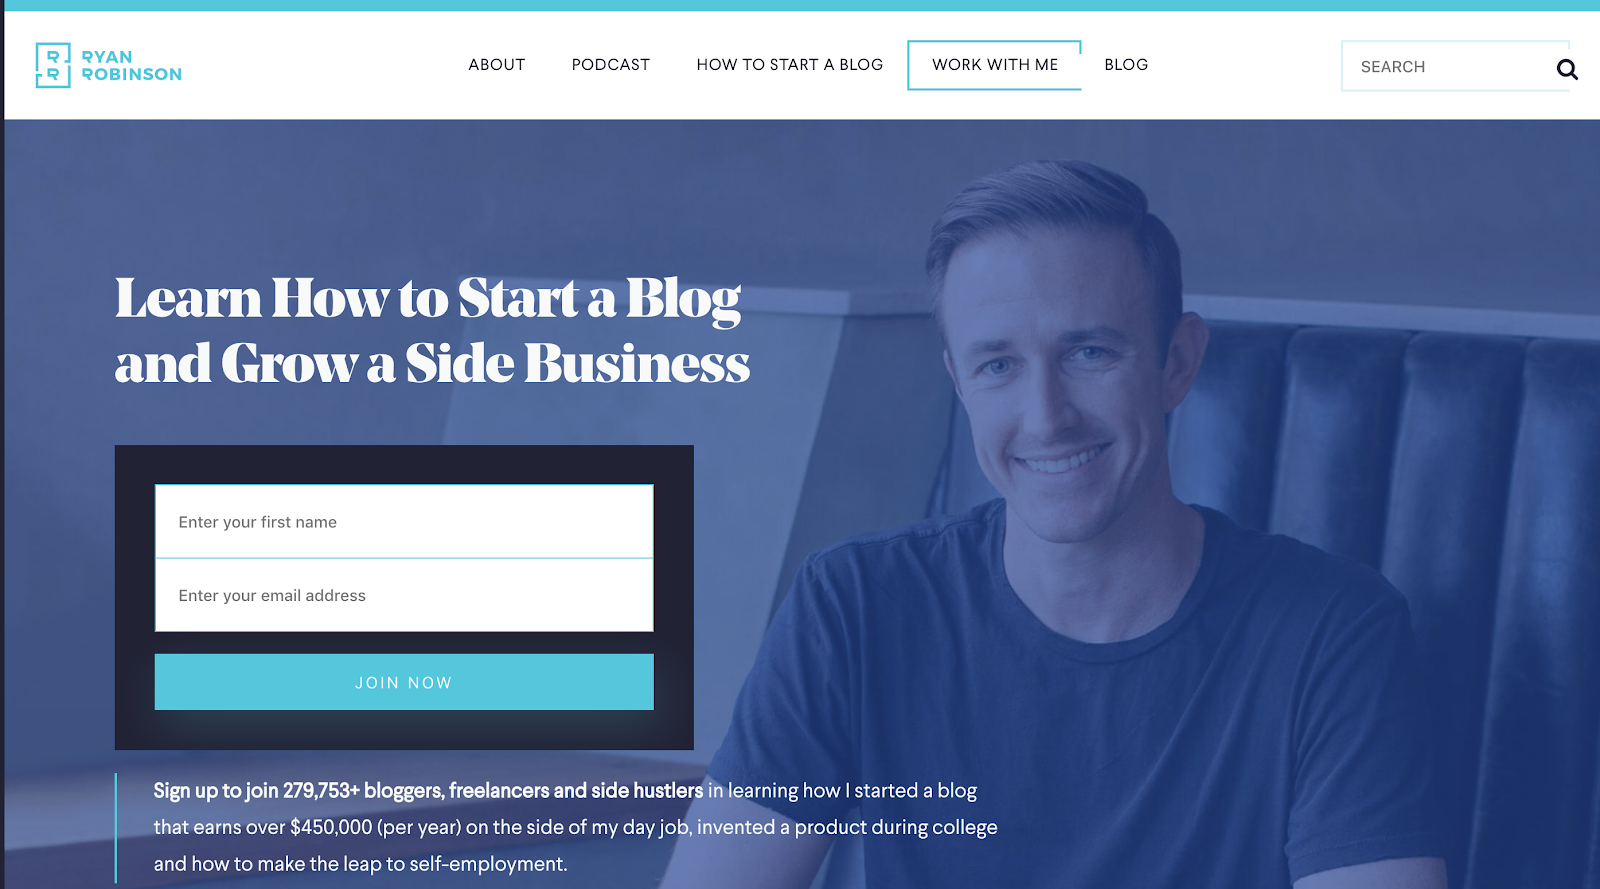 Ryan Robinson Blog Homepage (Colors for Branding) Example and Screenshot